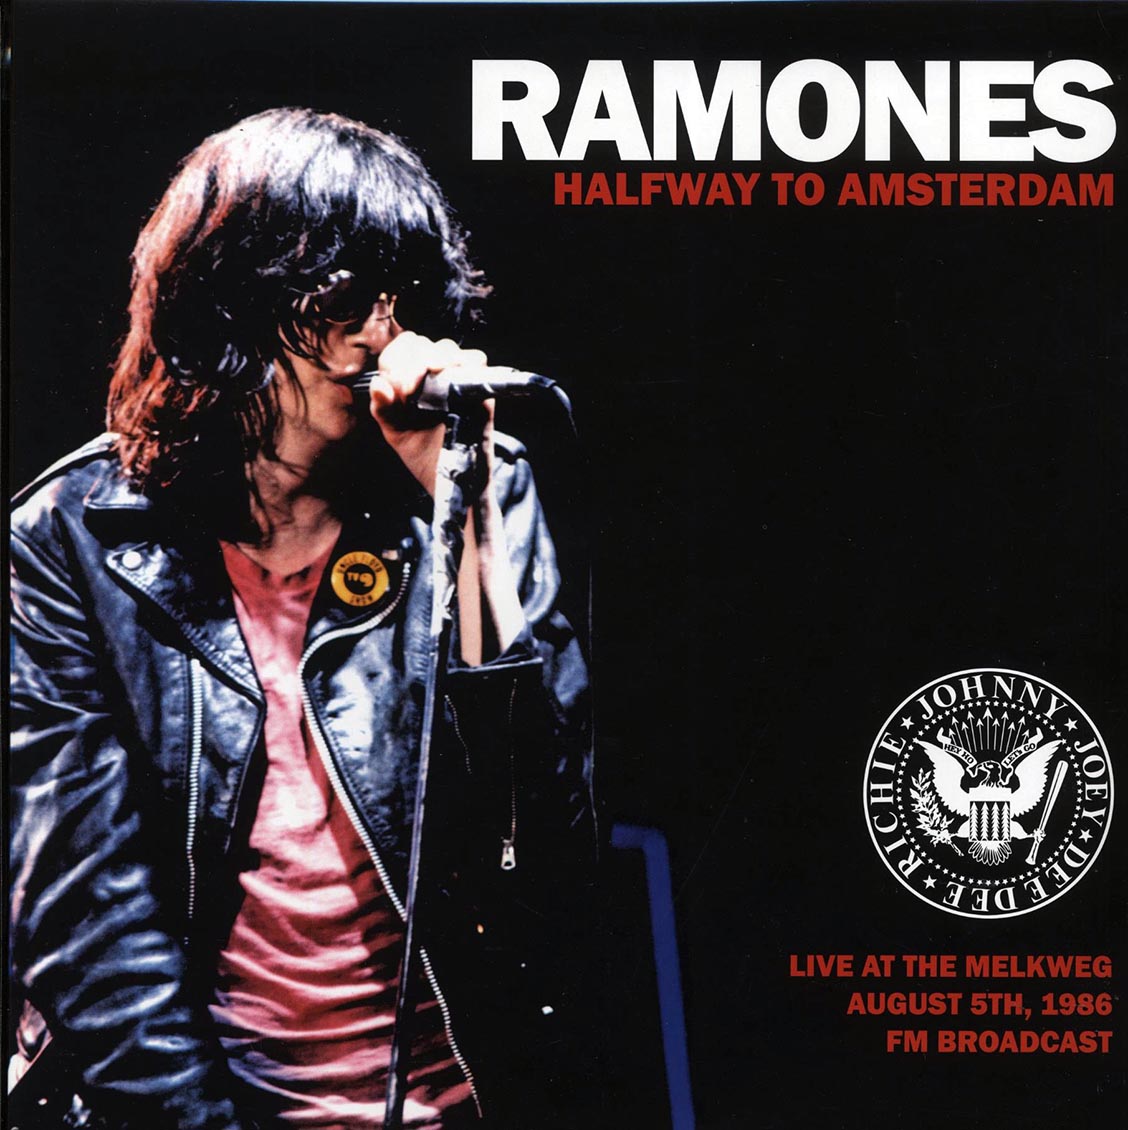 The Ramones - Halfway To Amsterdam: Live At The Melkweg August 5th, 1986 FM Broadcast (ltd. 500 copies made) (orange vinyl) - Vinyl LP